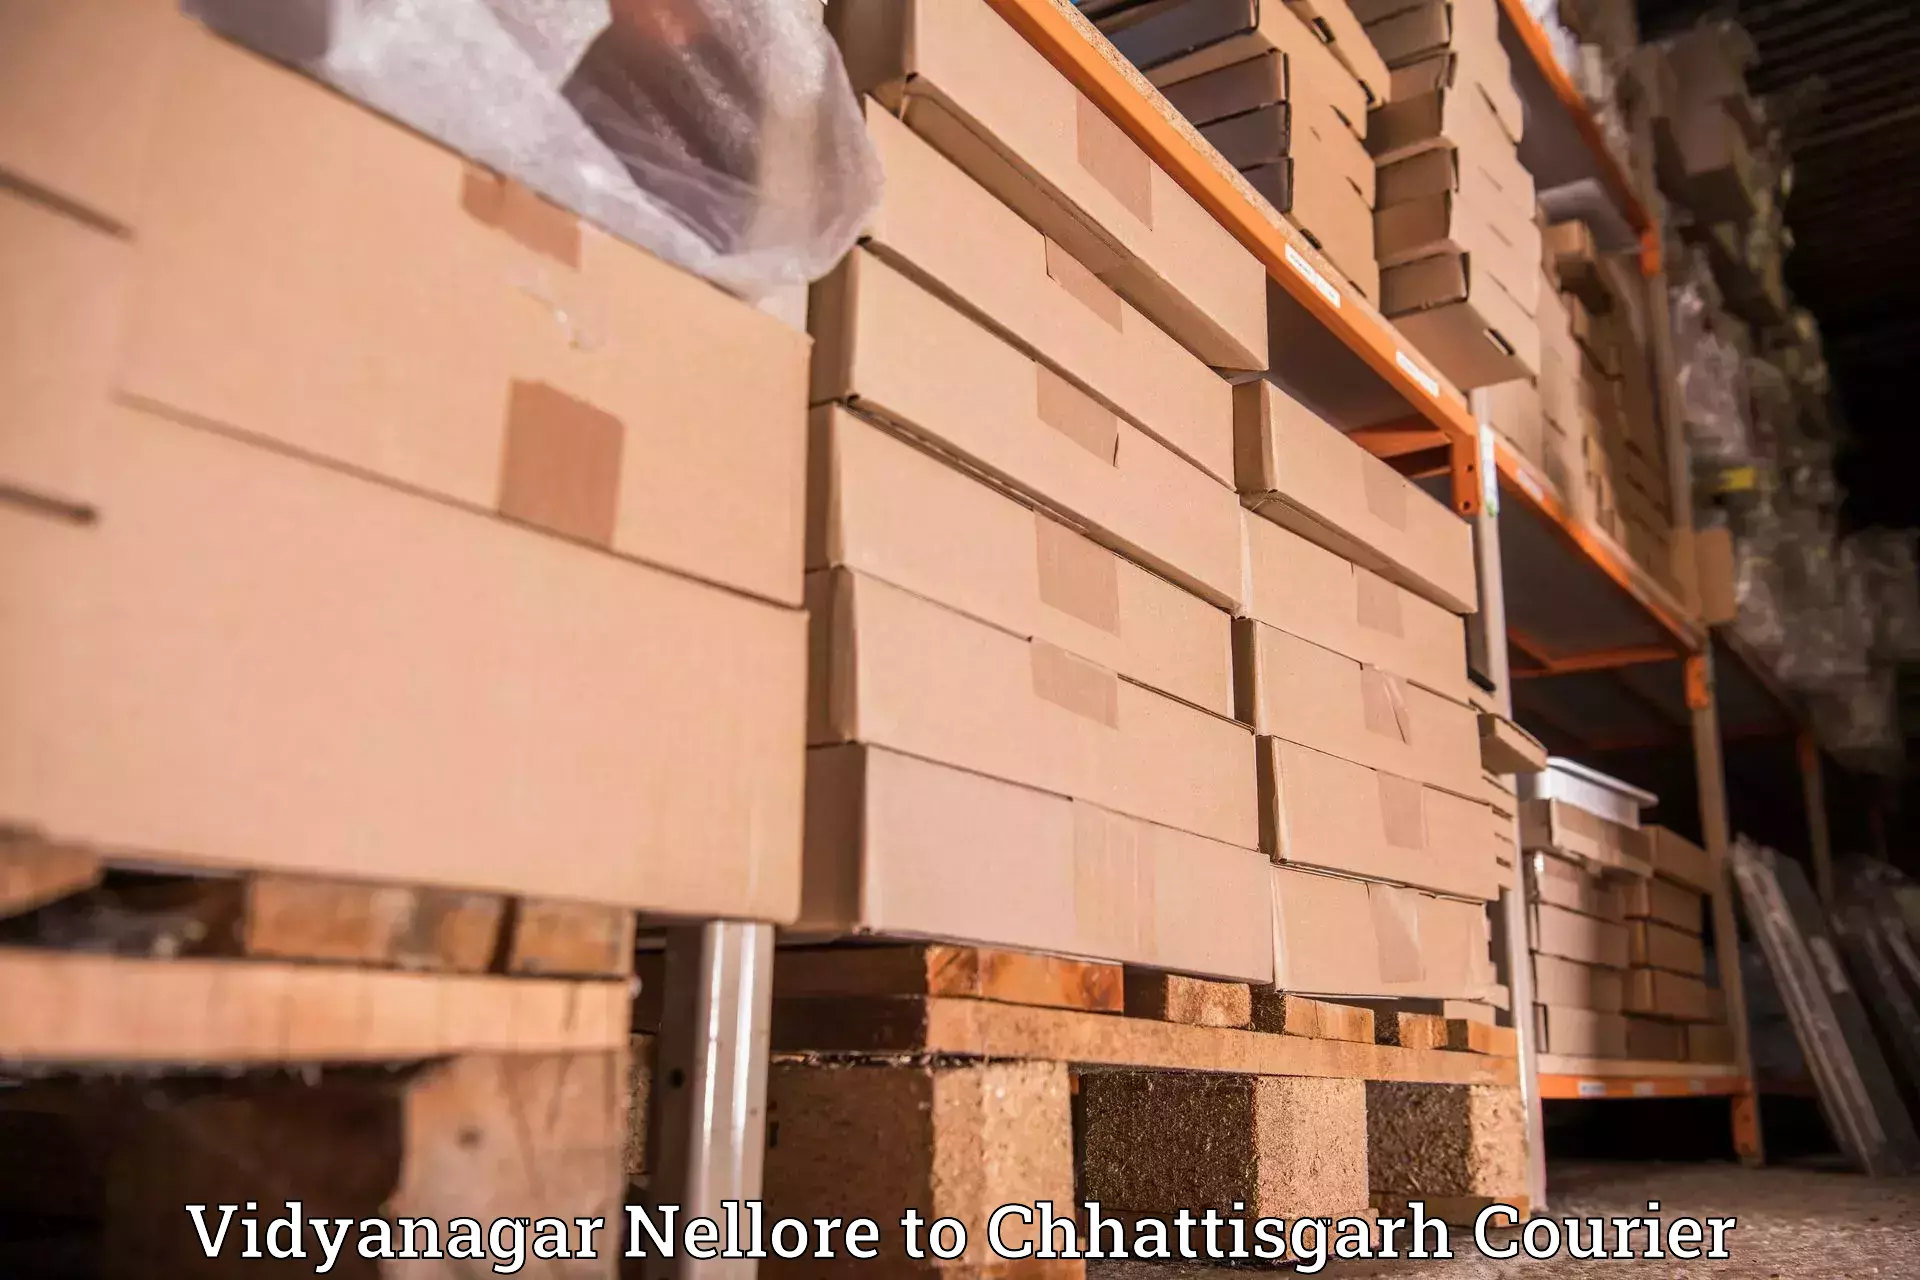 Reliable courier service Vidyanagar Nellore to Raigarh